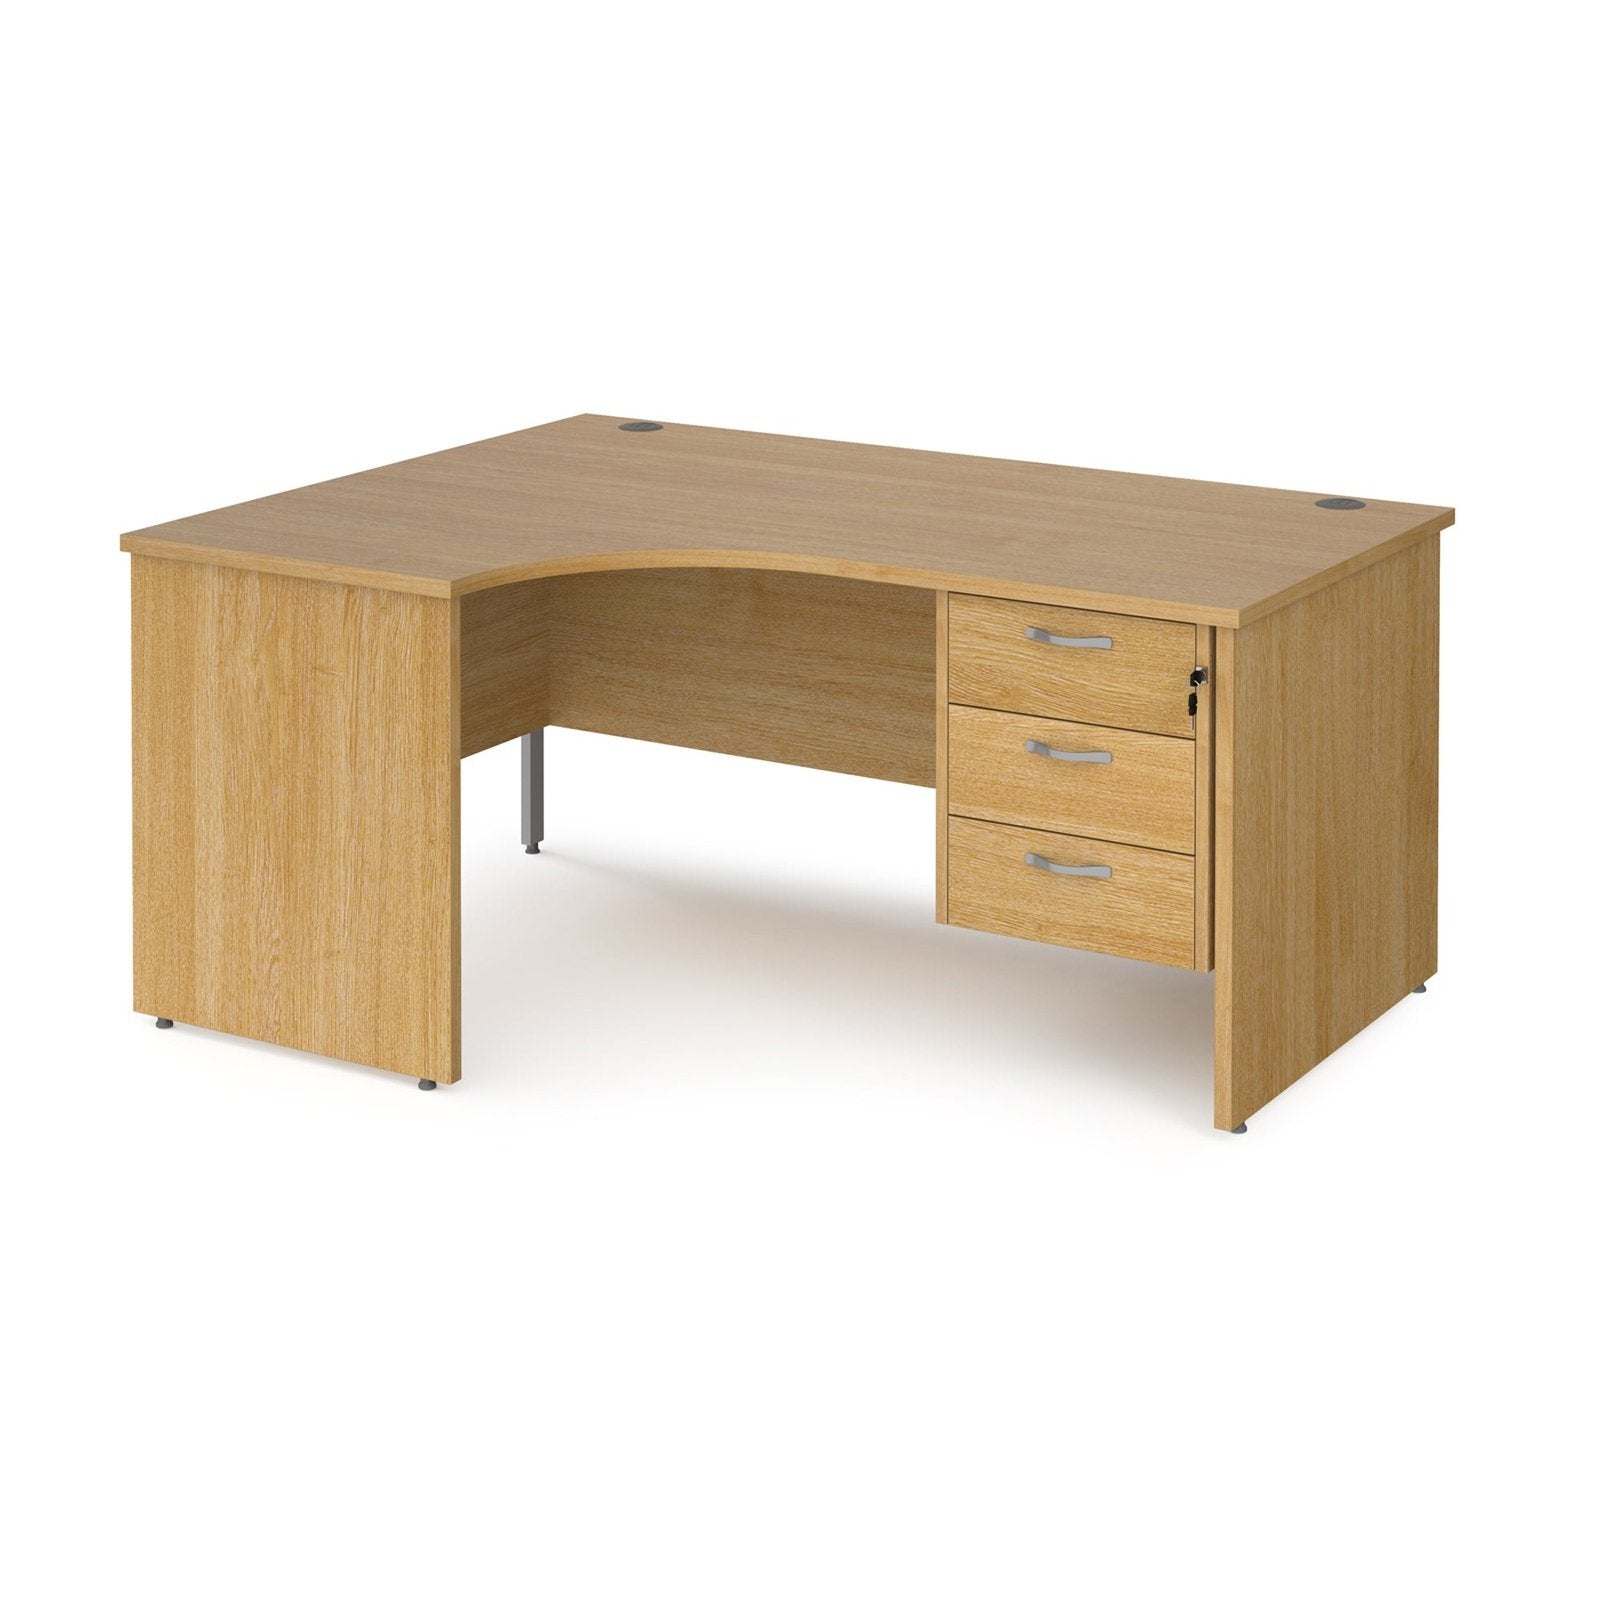 Maestro 25 panel leg left hand ergonomic desk with 3 drawer pedestal - Office Products Online